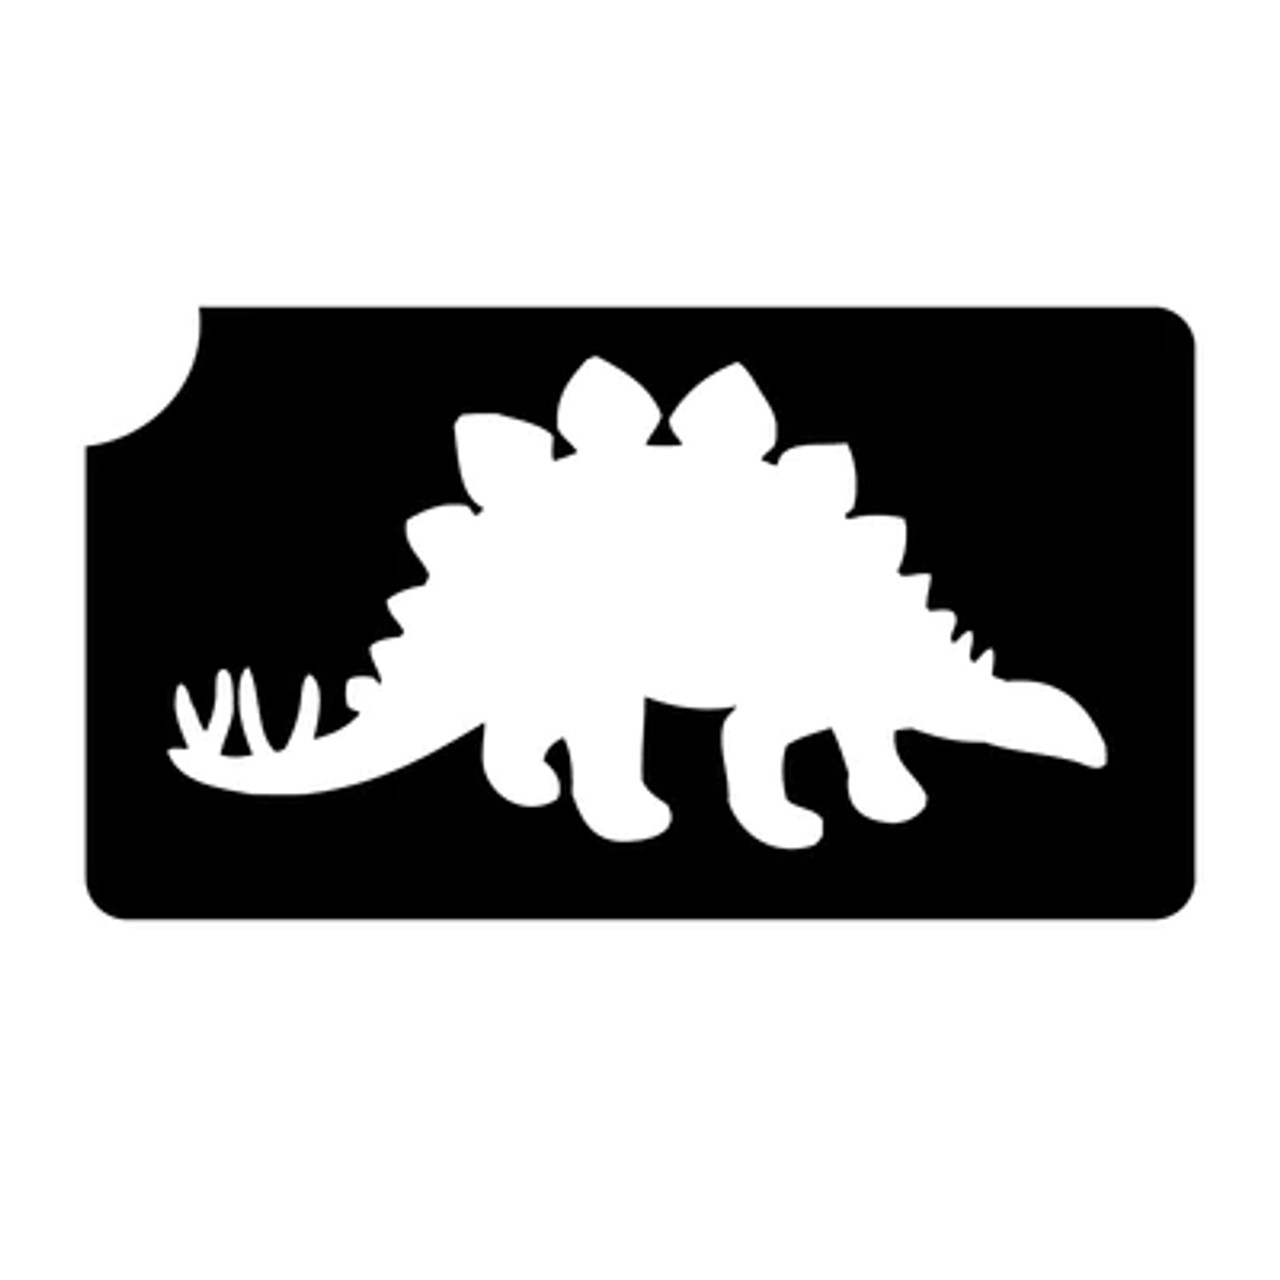 Stegosaurus 3 Layer Stencil Pack of 5